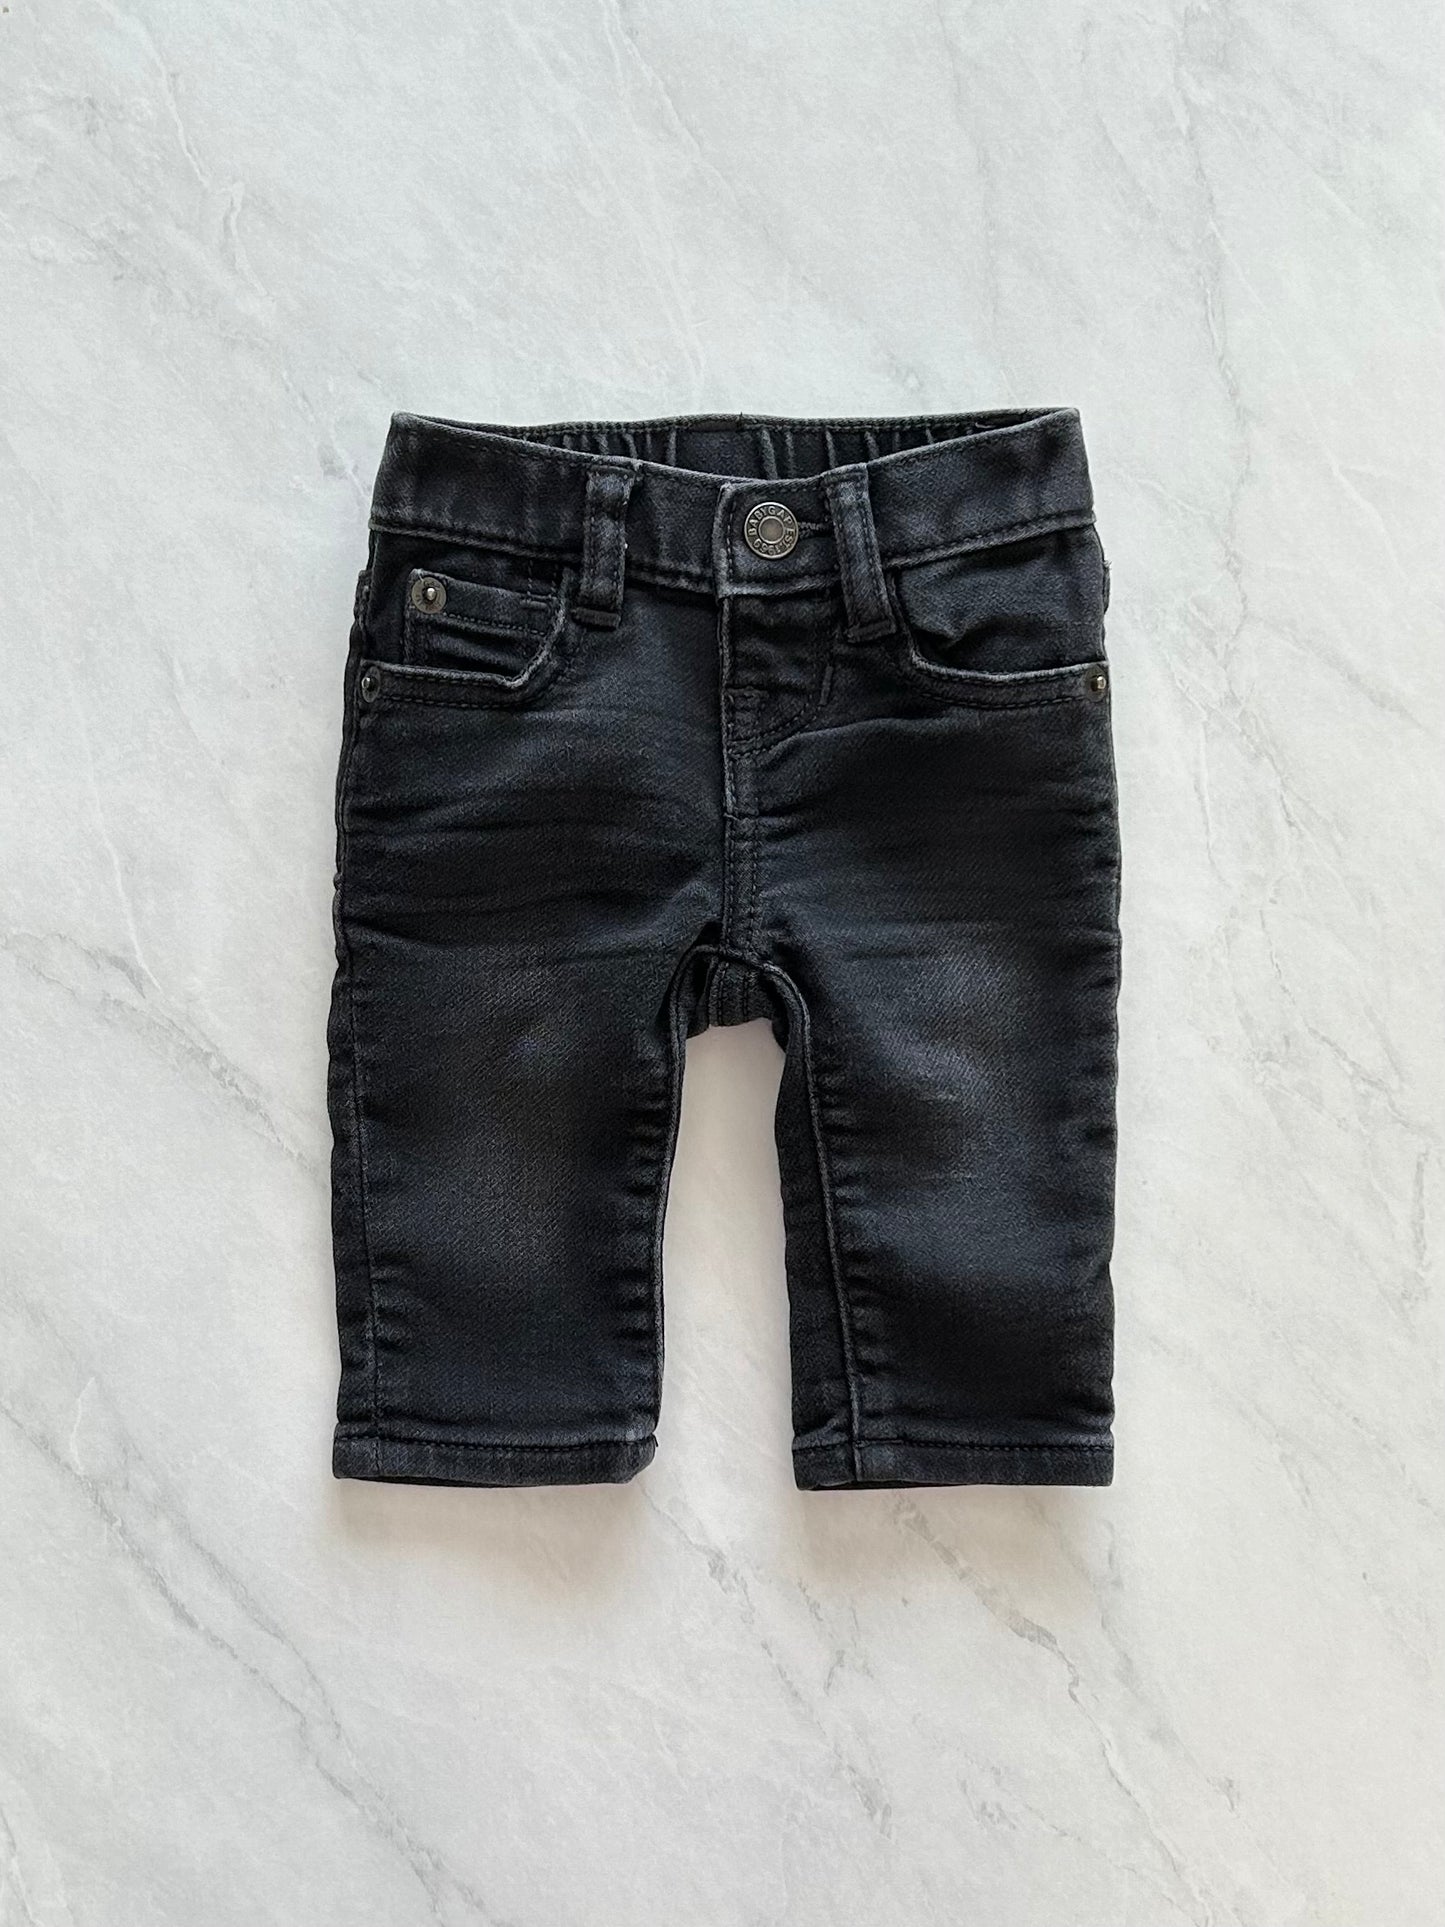 Jeans - Baby Gap - 0-3 mois